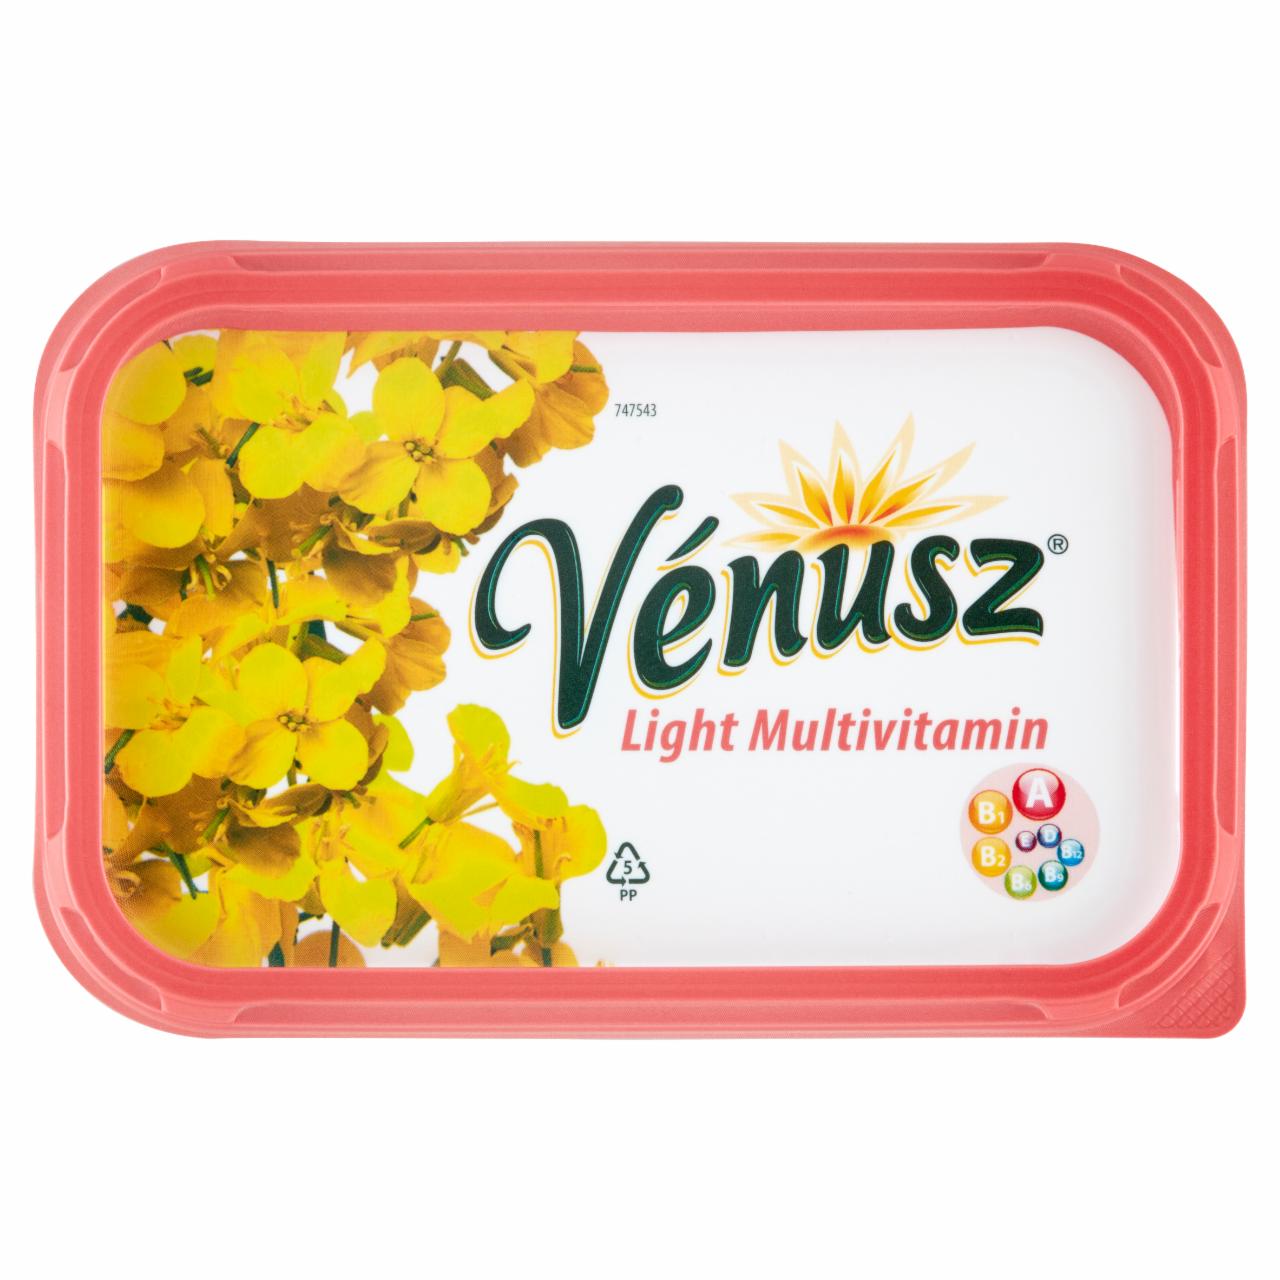 Képek - Vénusz Light Multivitamin 40% zsírtartalmú margarin 450 g